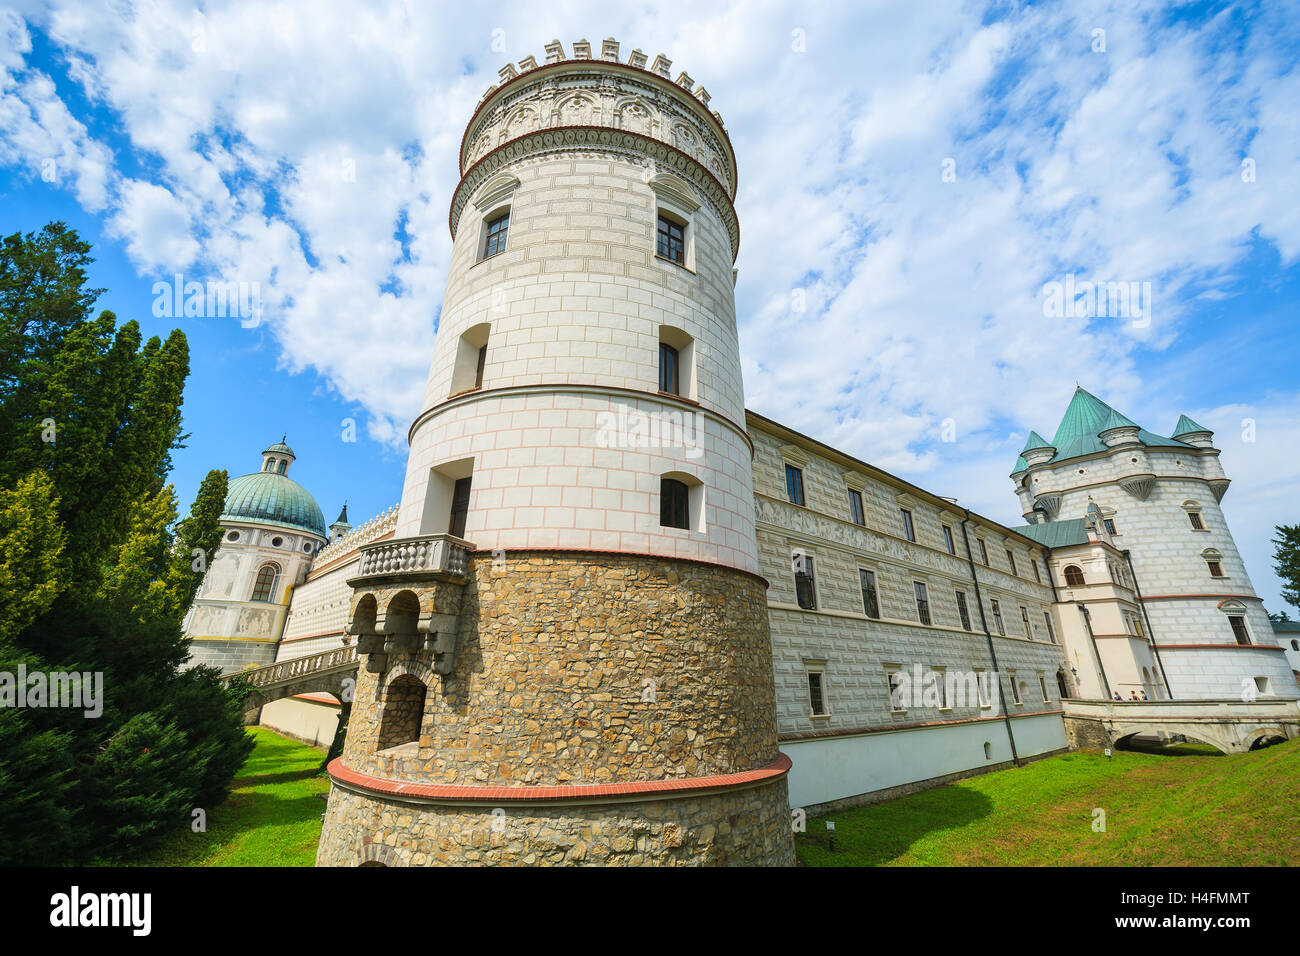 Towers of beautiful Krasiczyn castle on sunny summer day, Poland Stock Photo